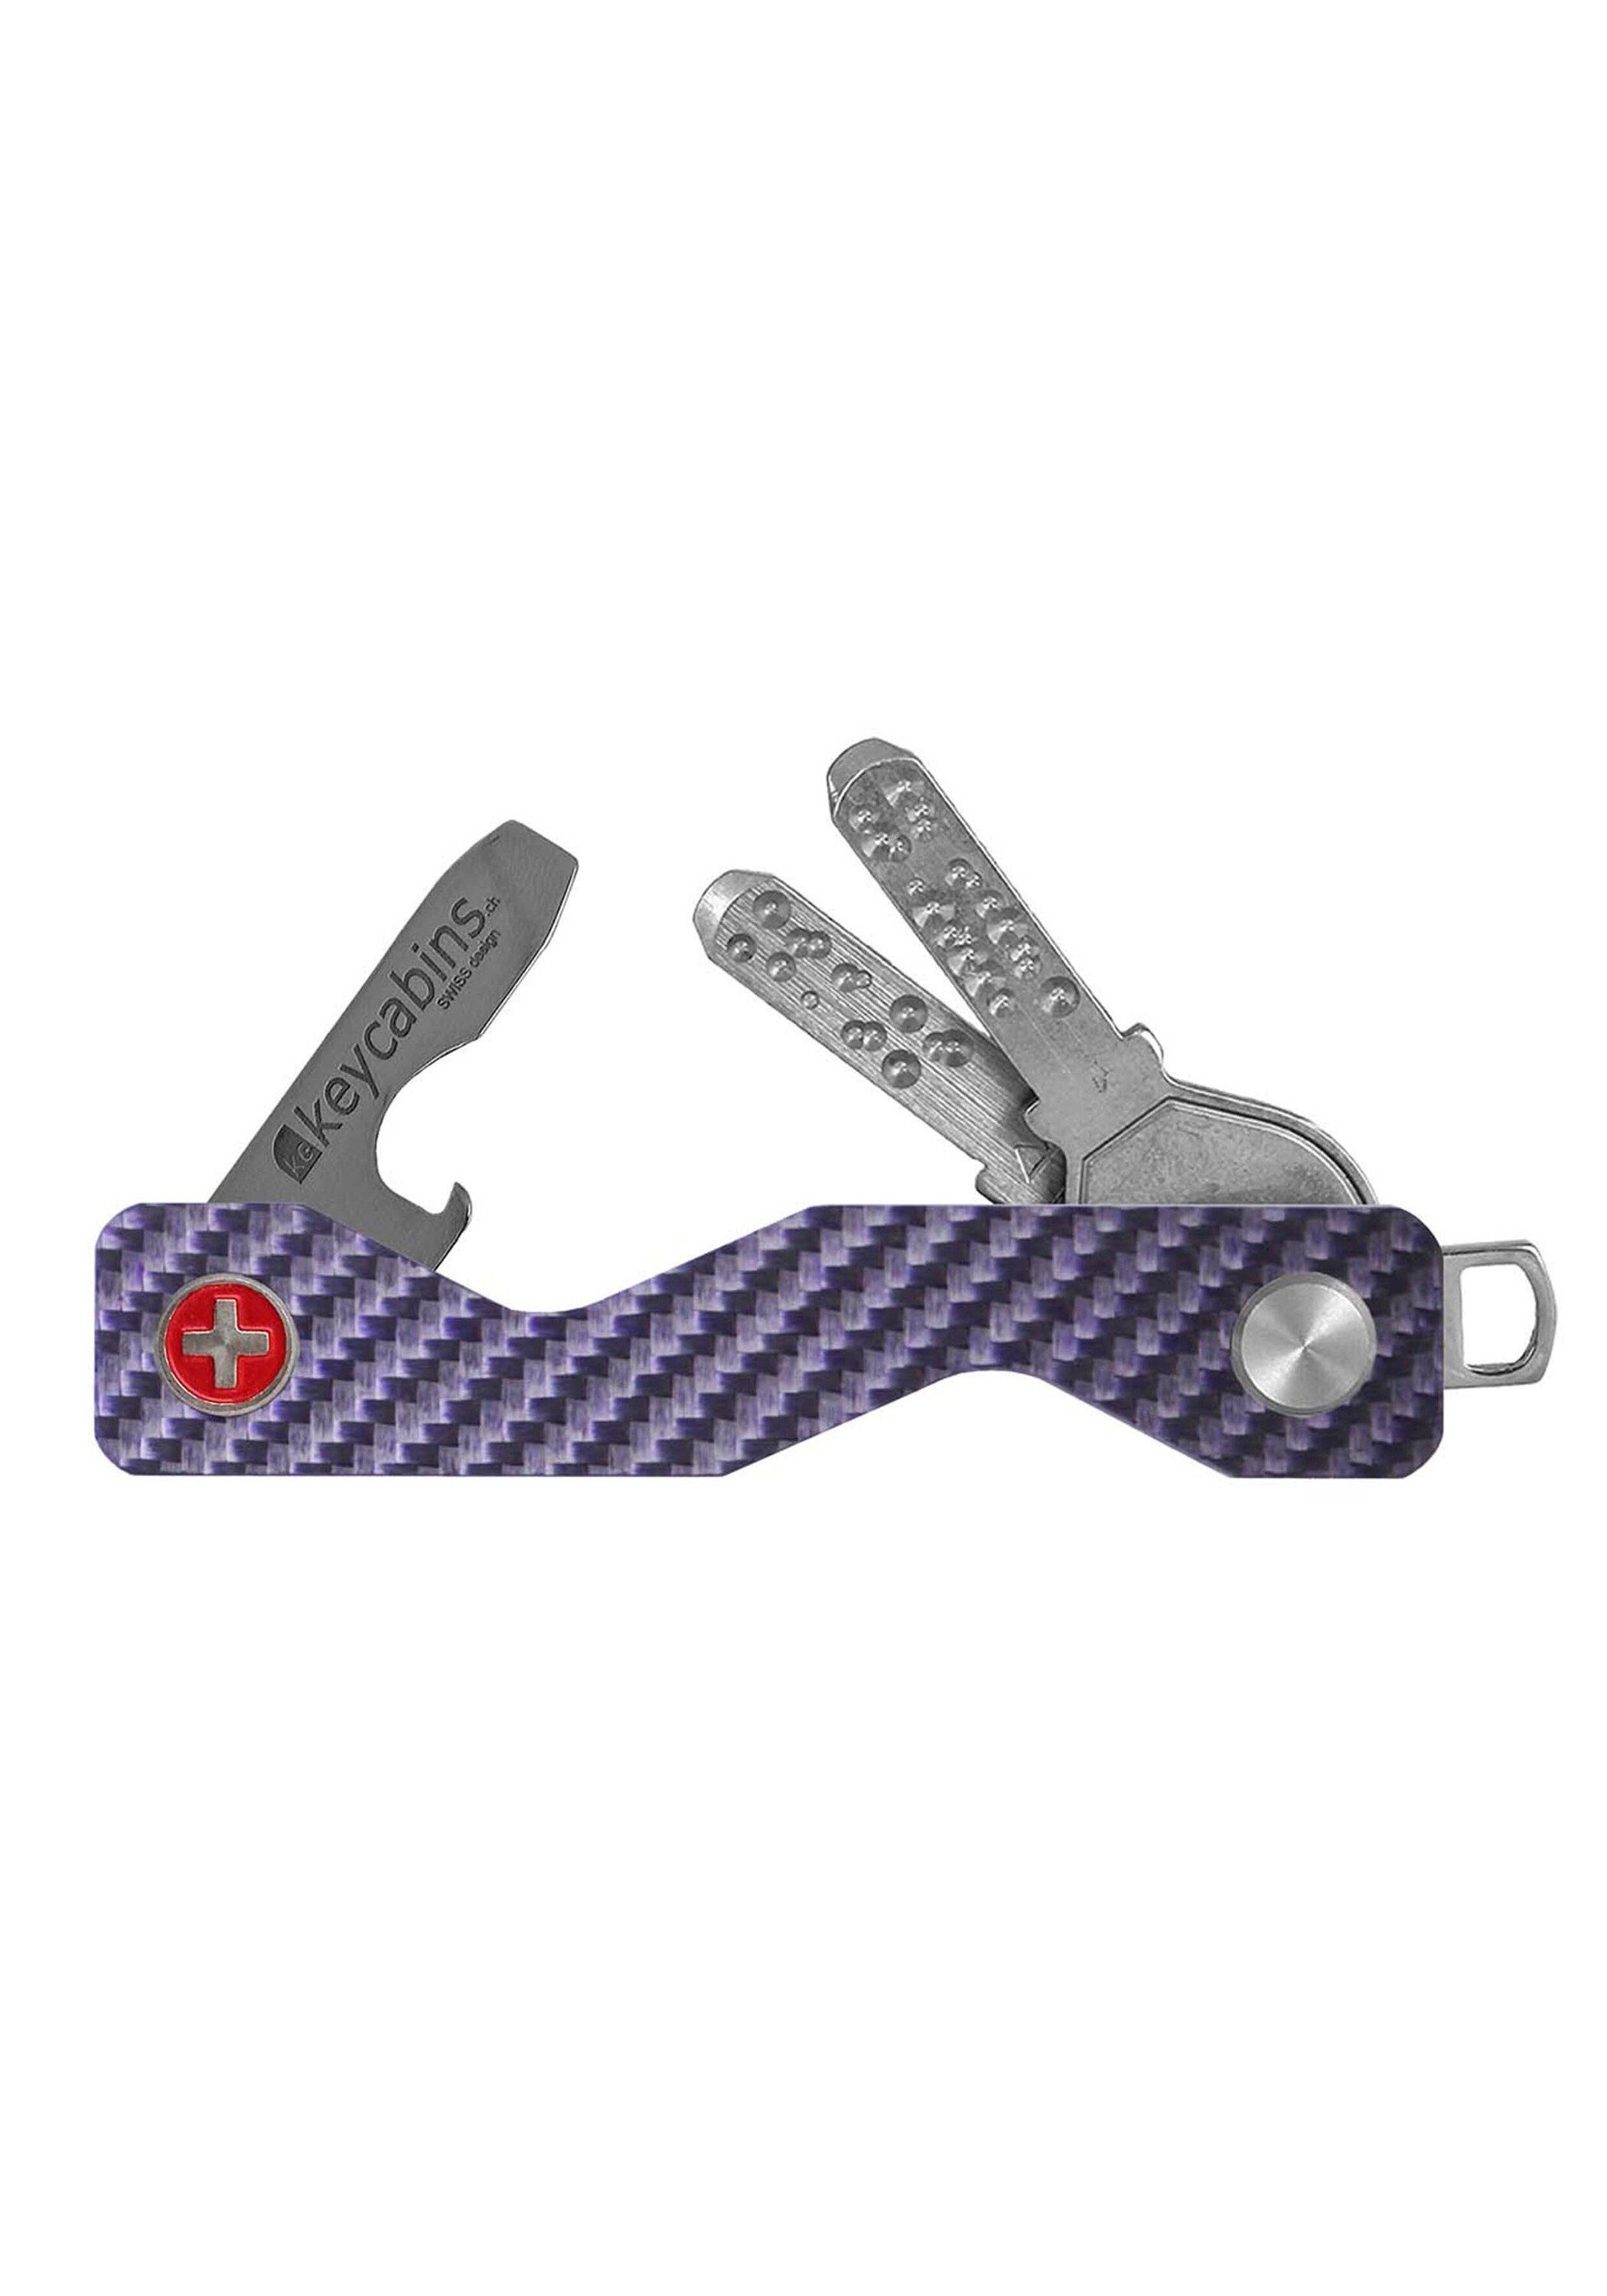 【berühmt】 keycabins Schlüsselanhänger Carbon violett SWISS S3, Made